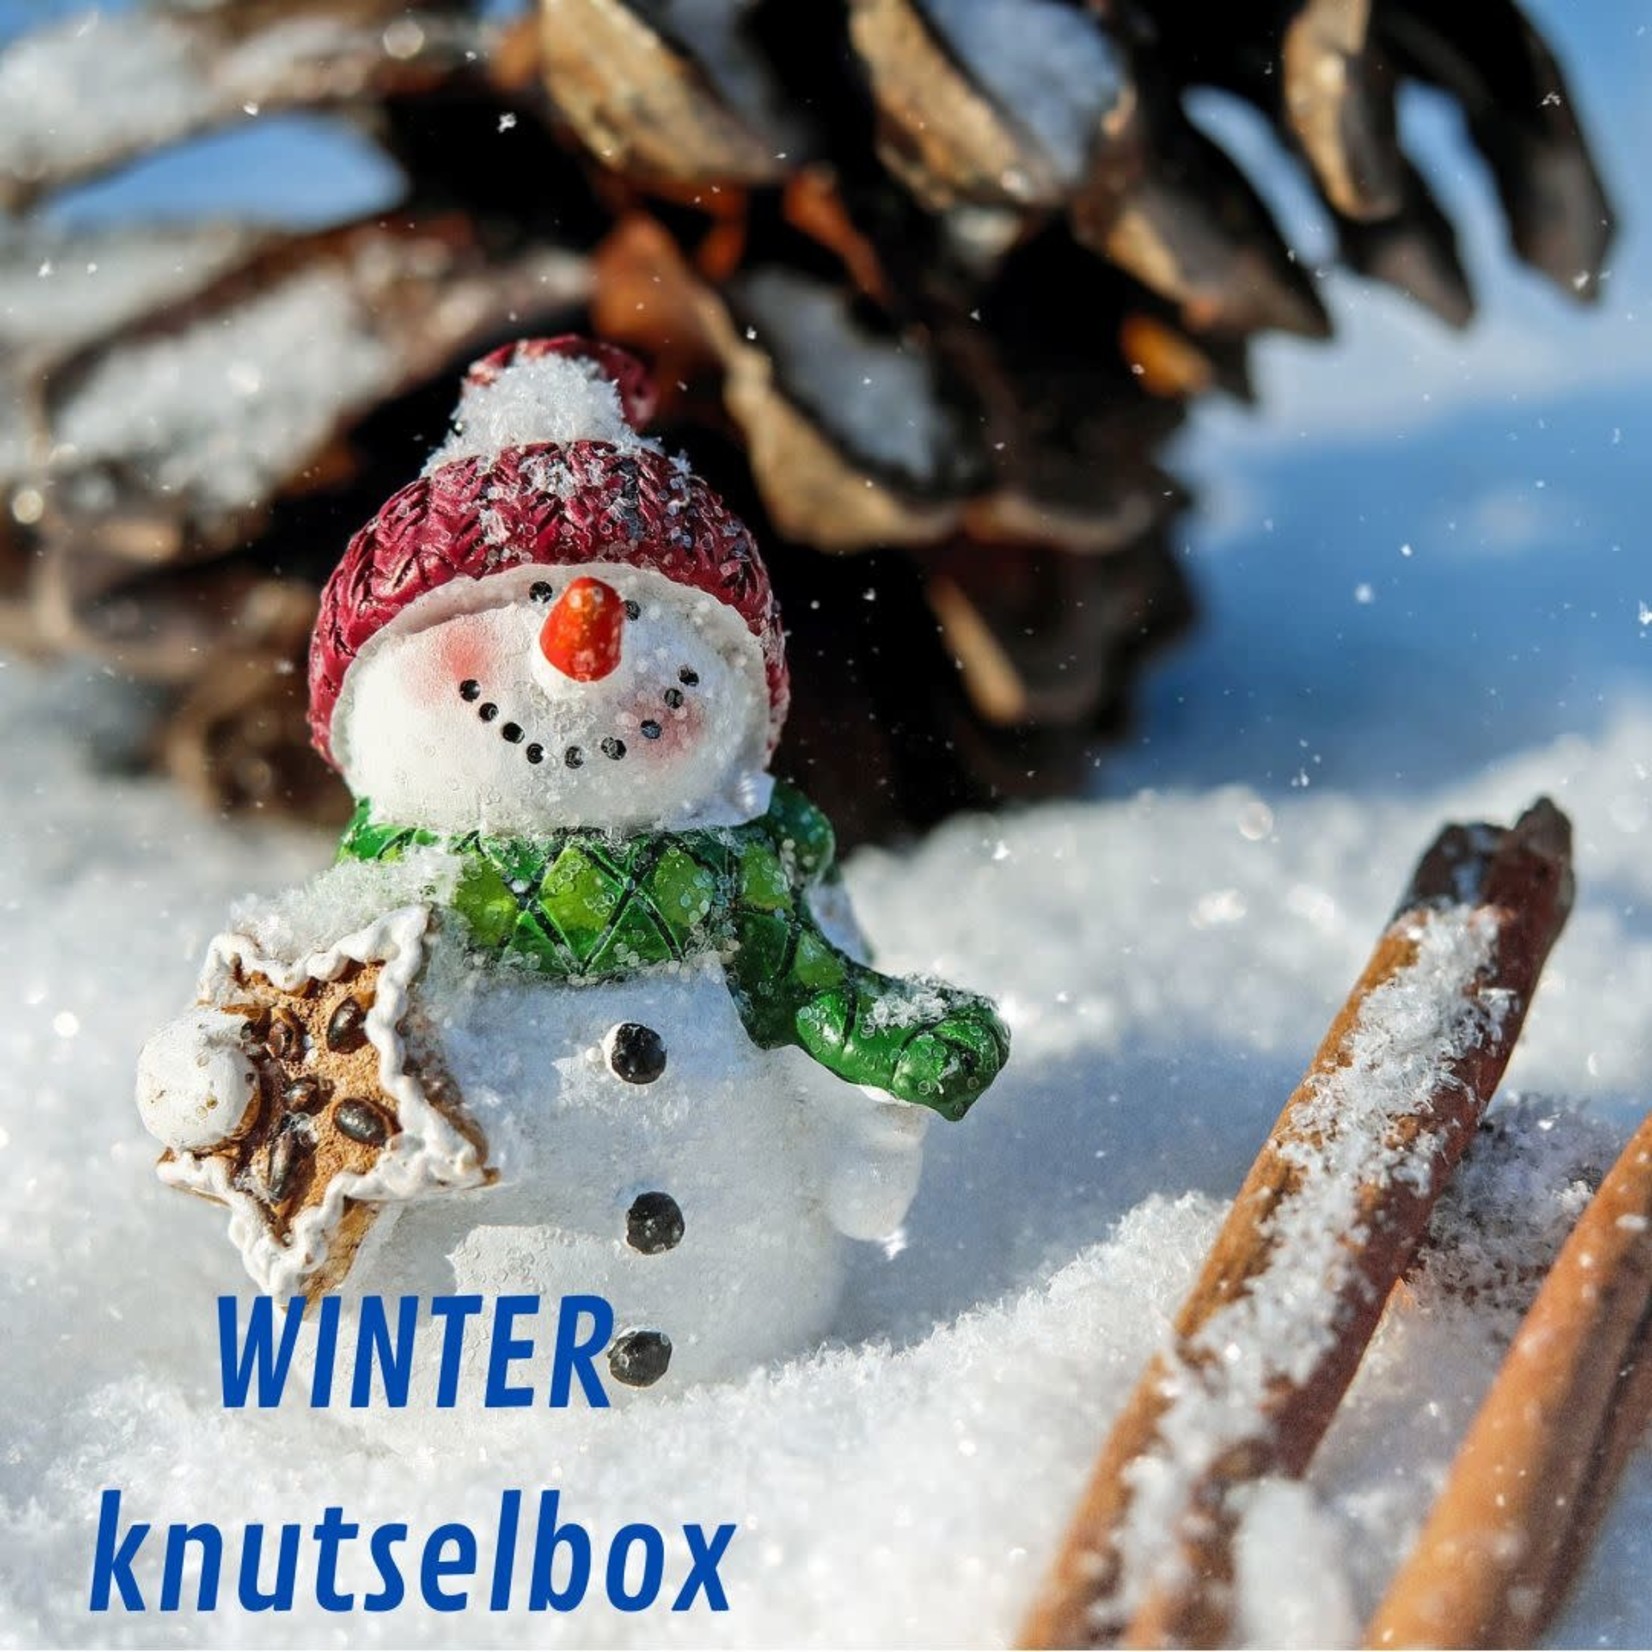 Knutselbox winter